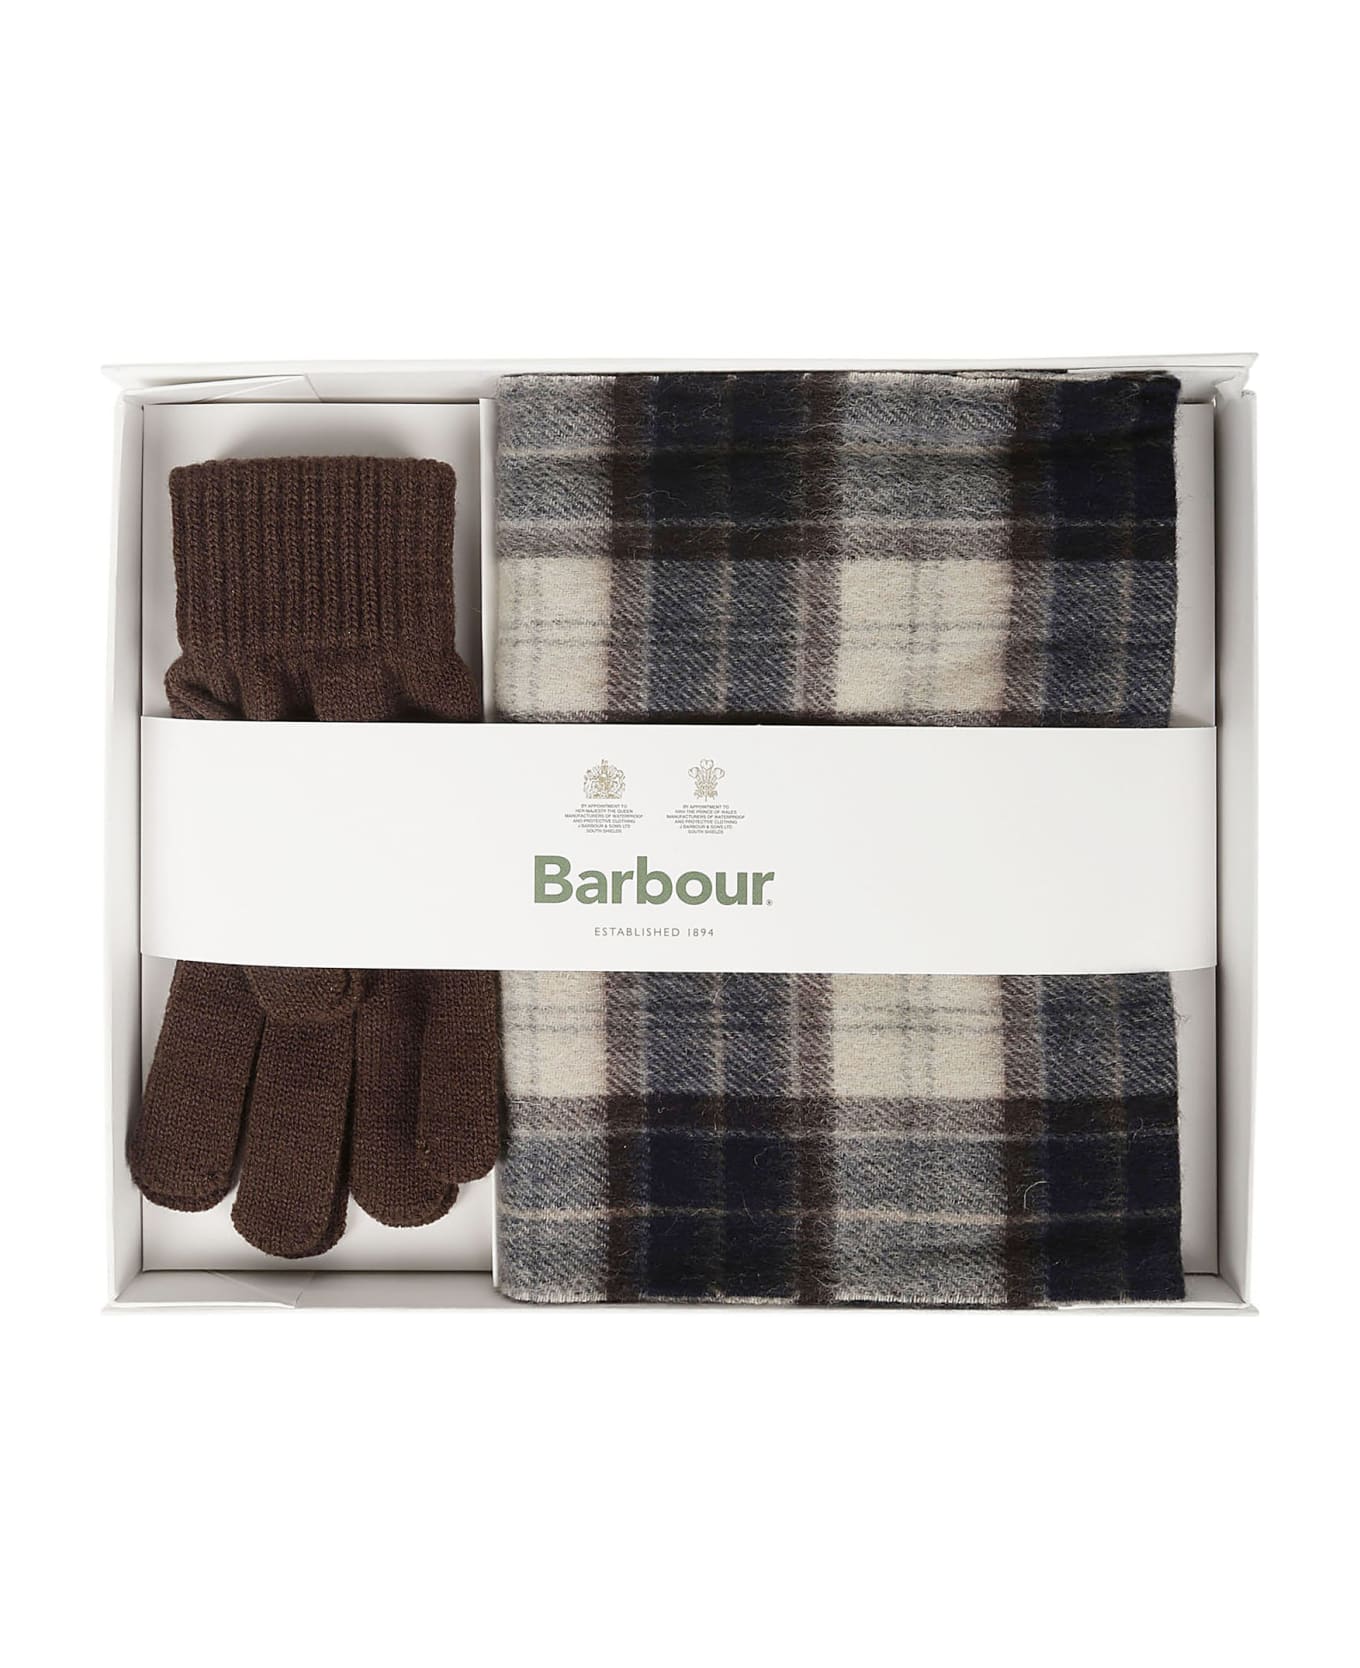 Barbour Tartan Scarf Glove Gift Set - Autumn Dress